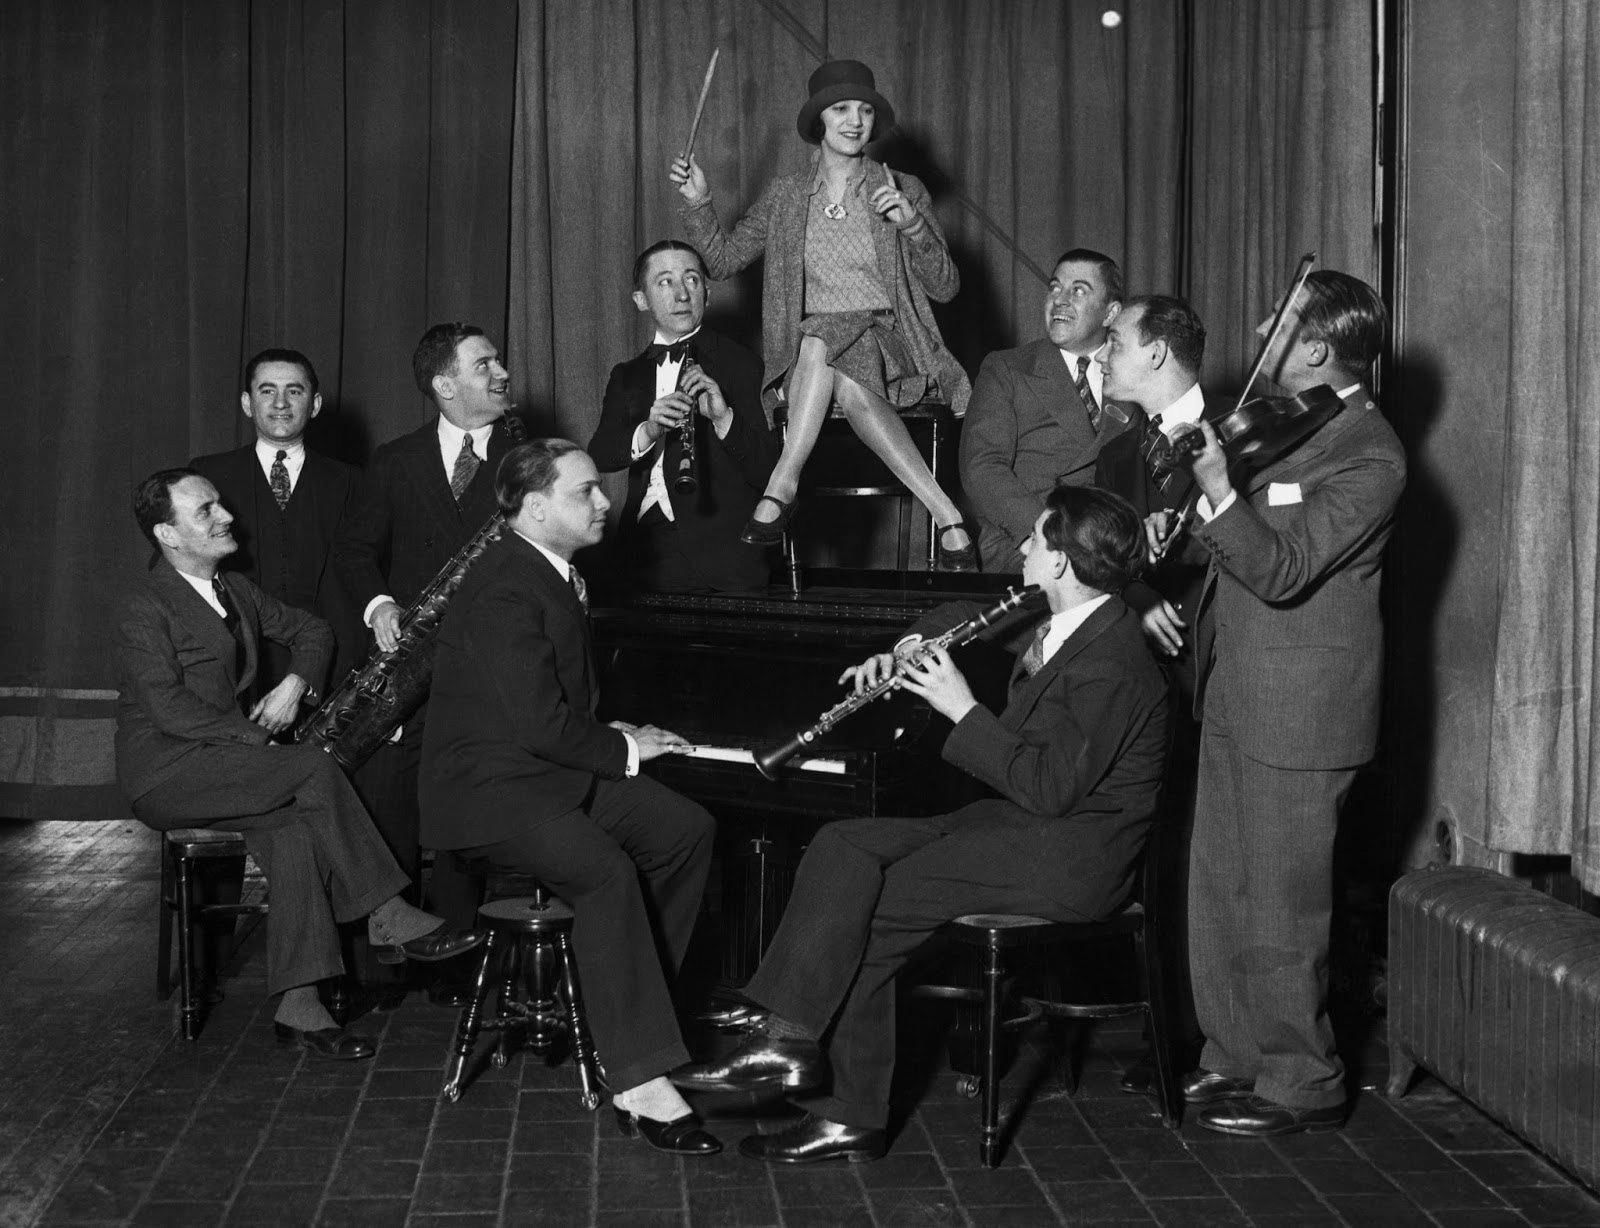 Джаз-бэнд 20 век. Джаз 1920е США. Музыканты Америки 20 века. Джаз в США 1920-Е годы.